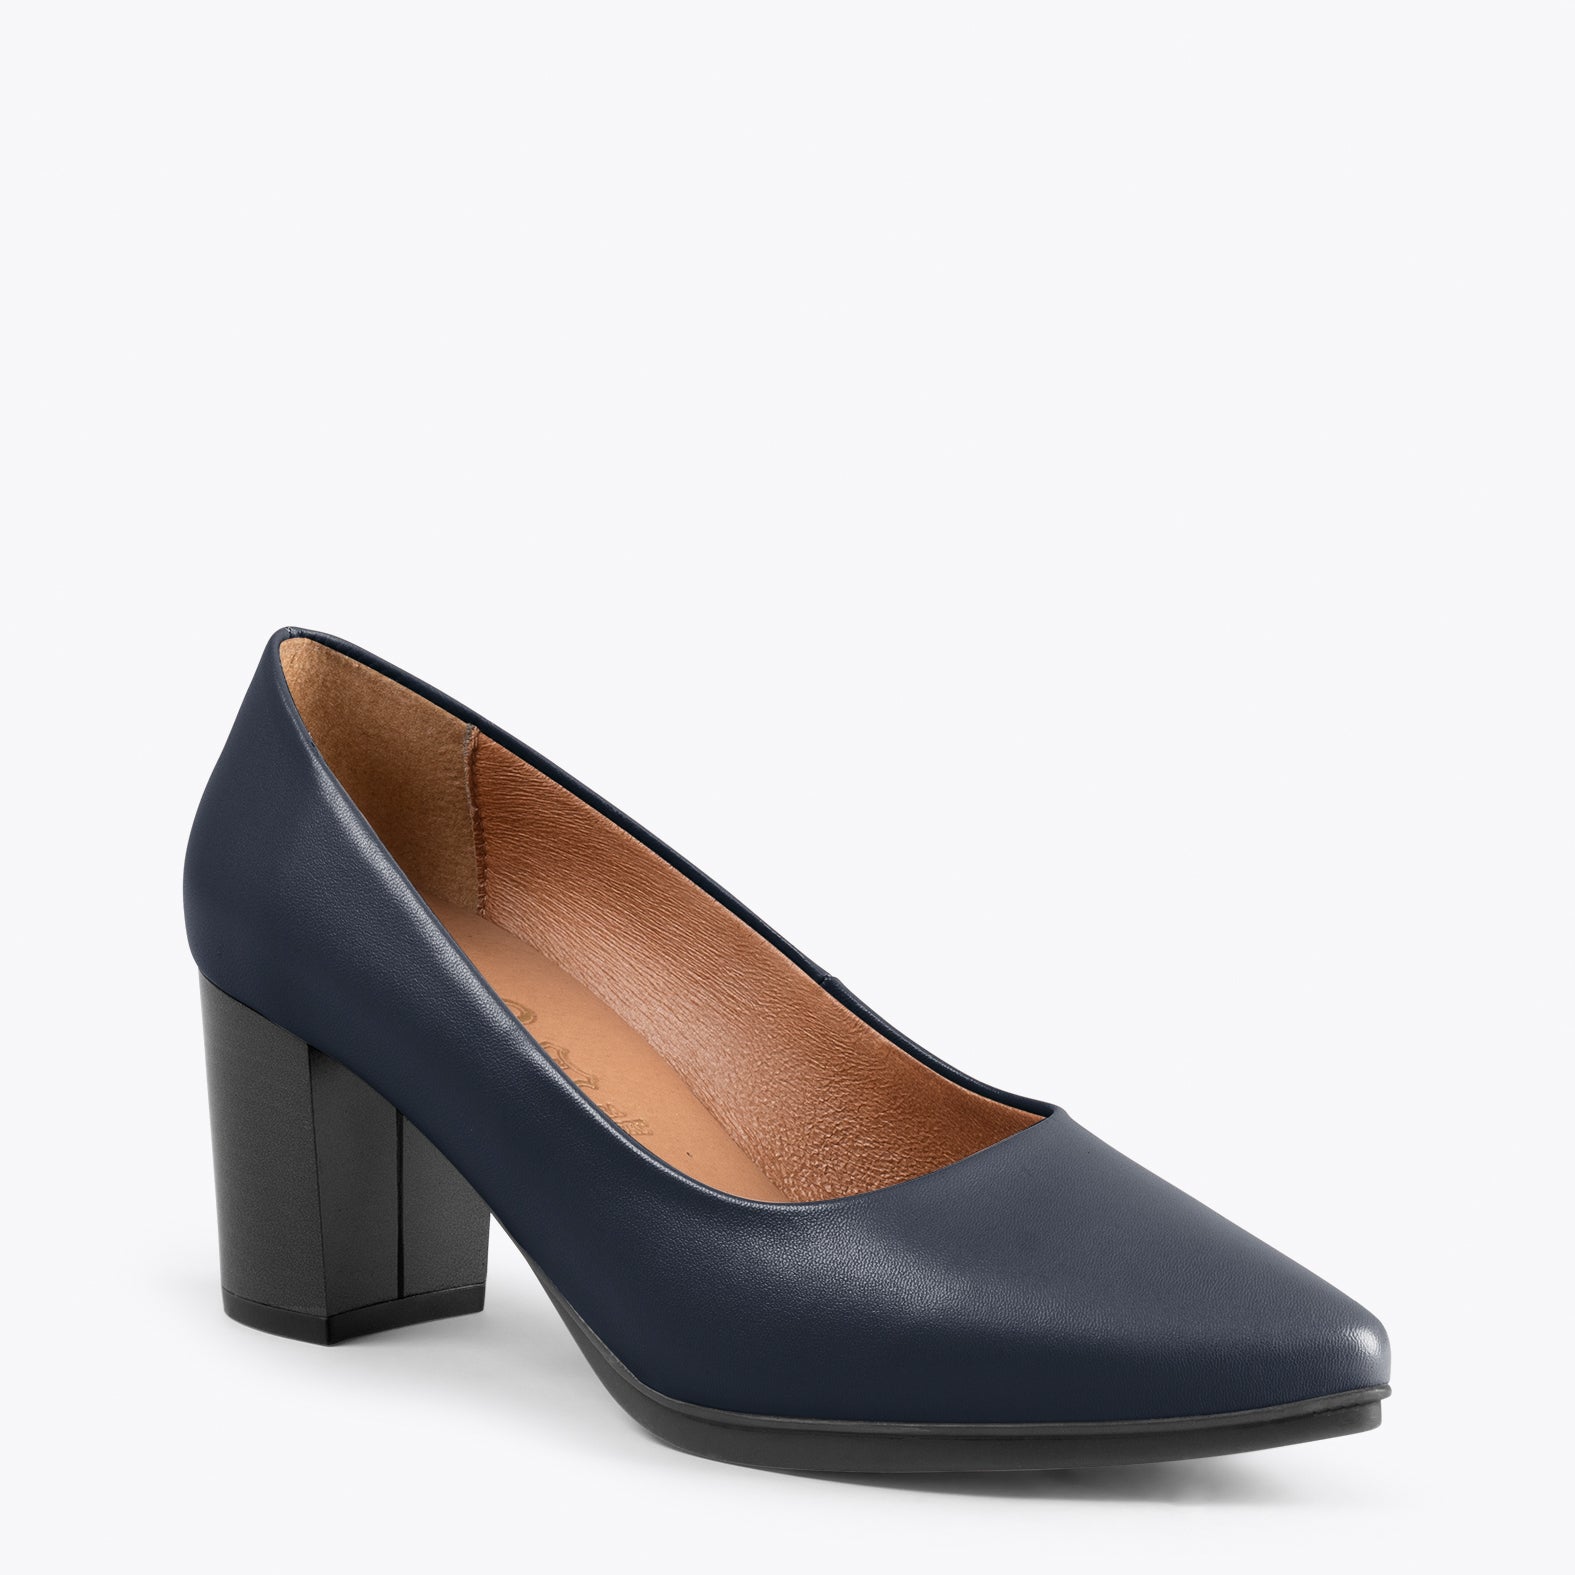 URBAN S SALON – NAVY nappa leather mid heels